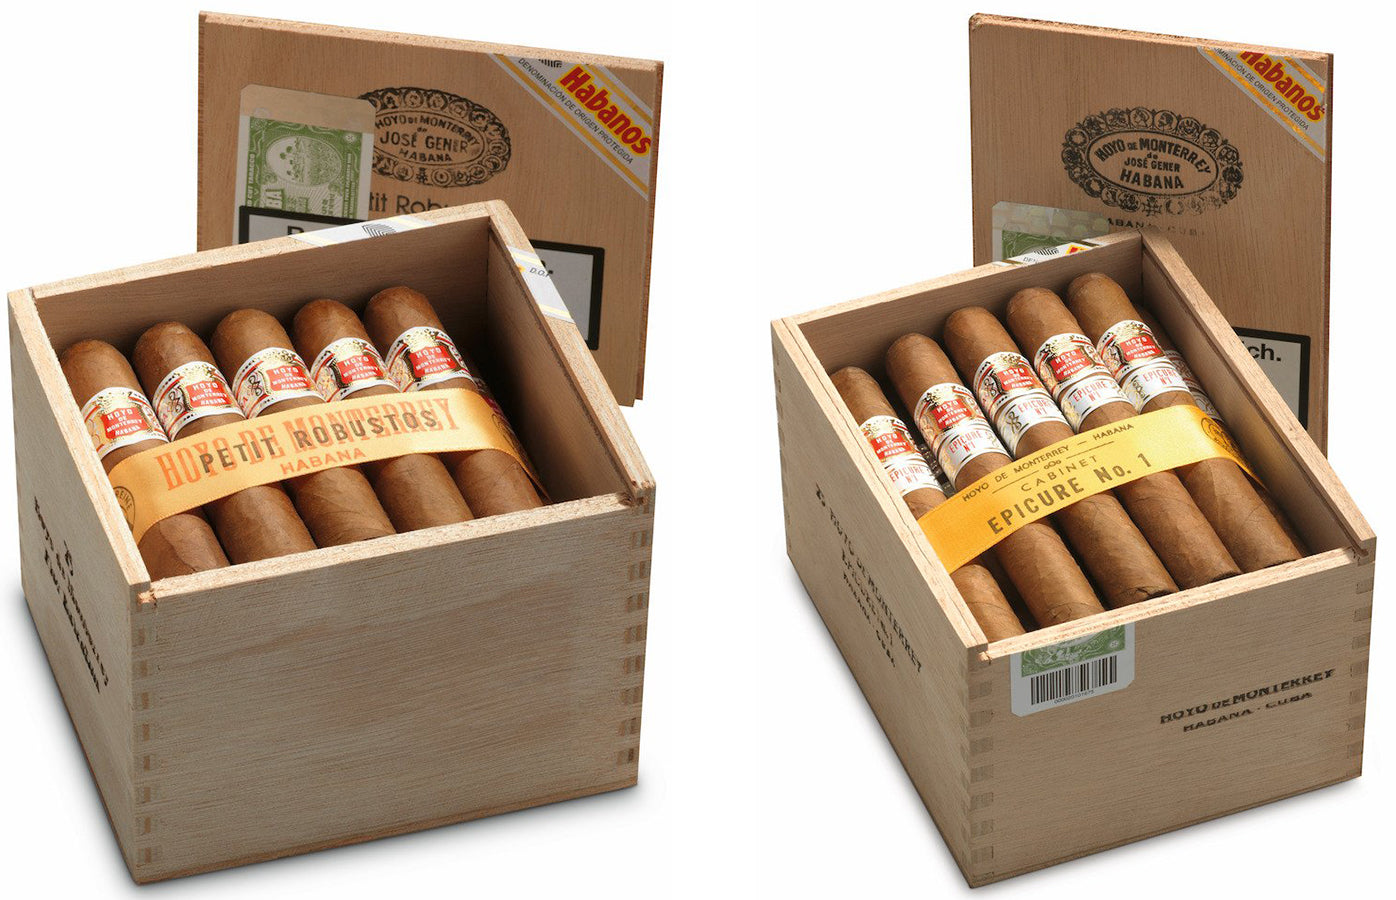 Hoyo de monterrey petit robusto cigar and epicure no. 1 cigar EGM Cigars